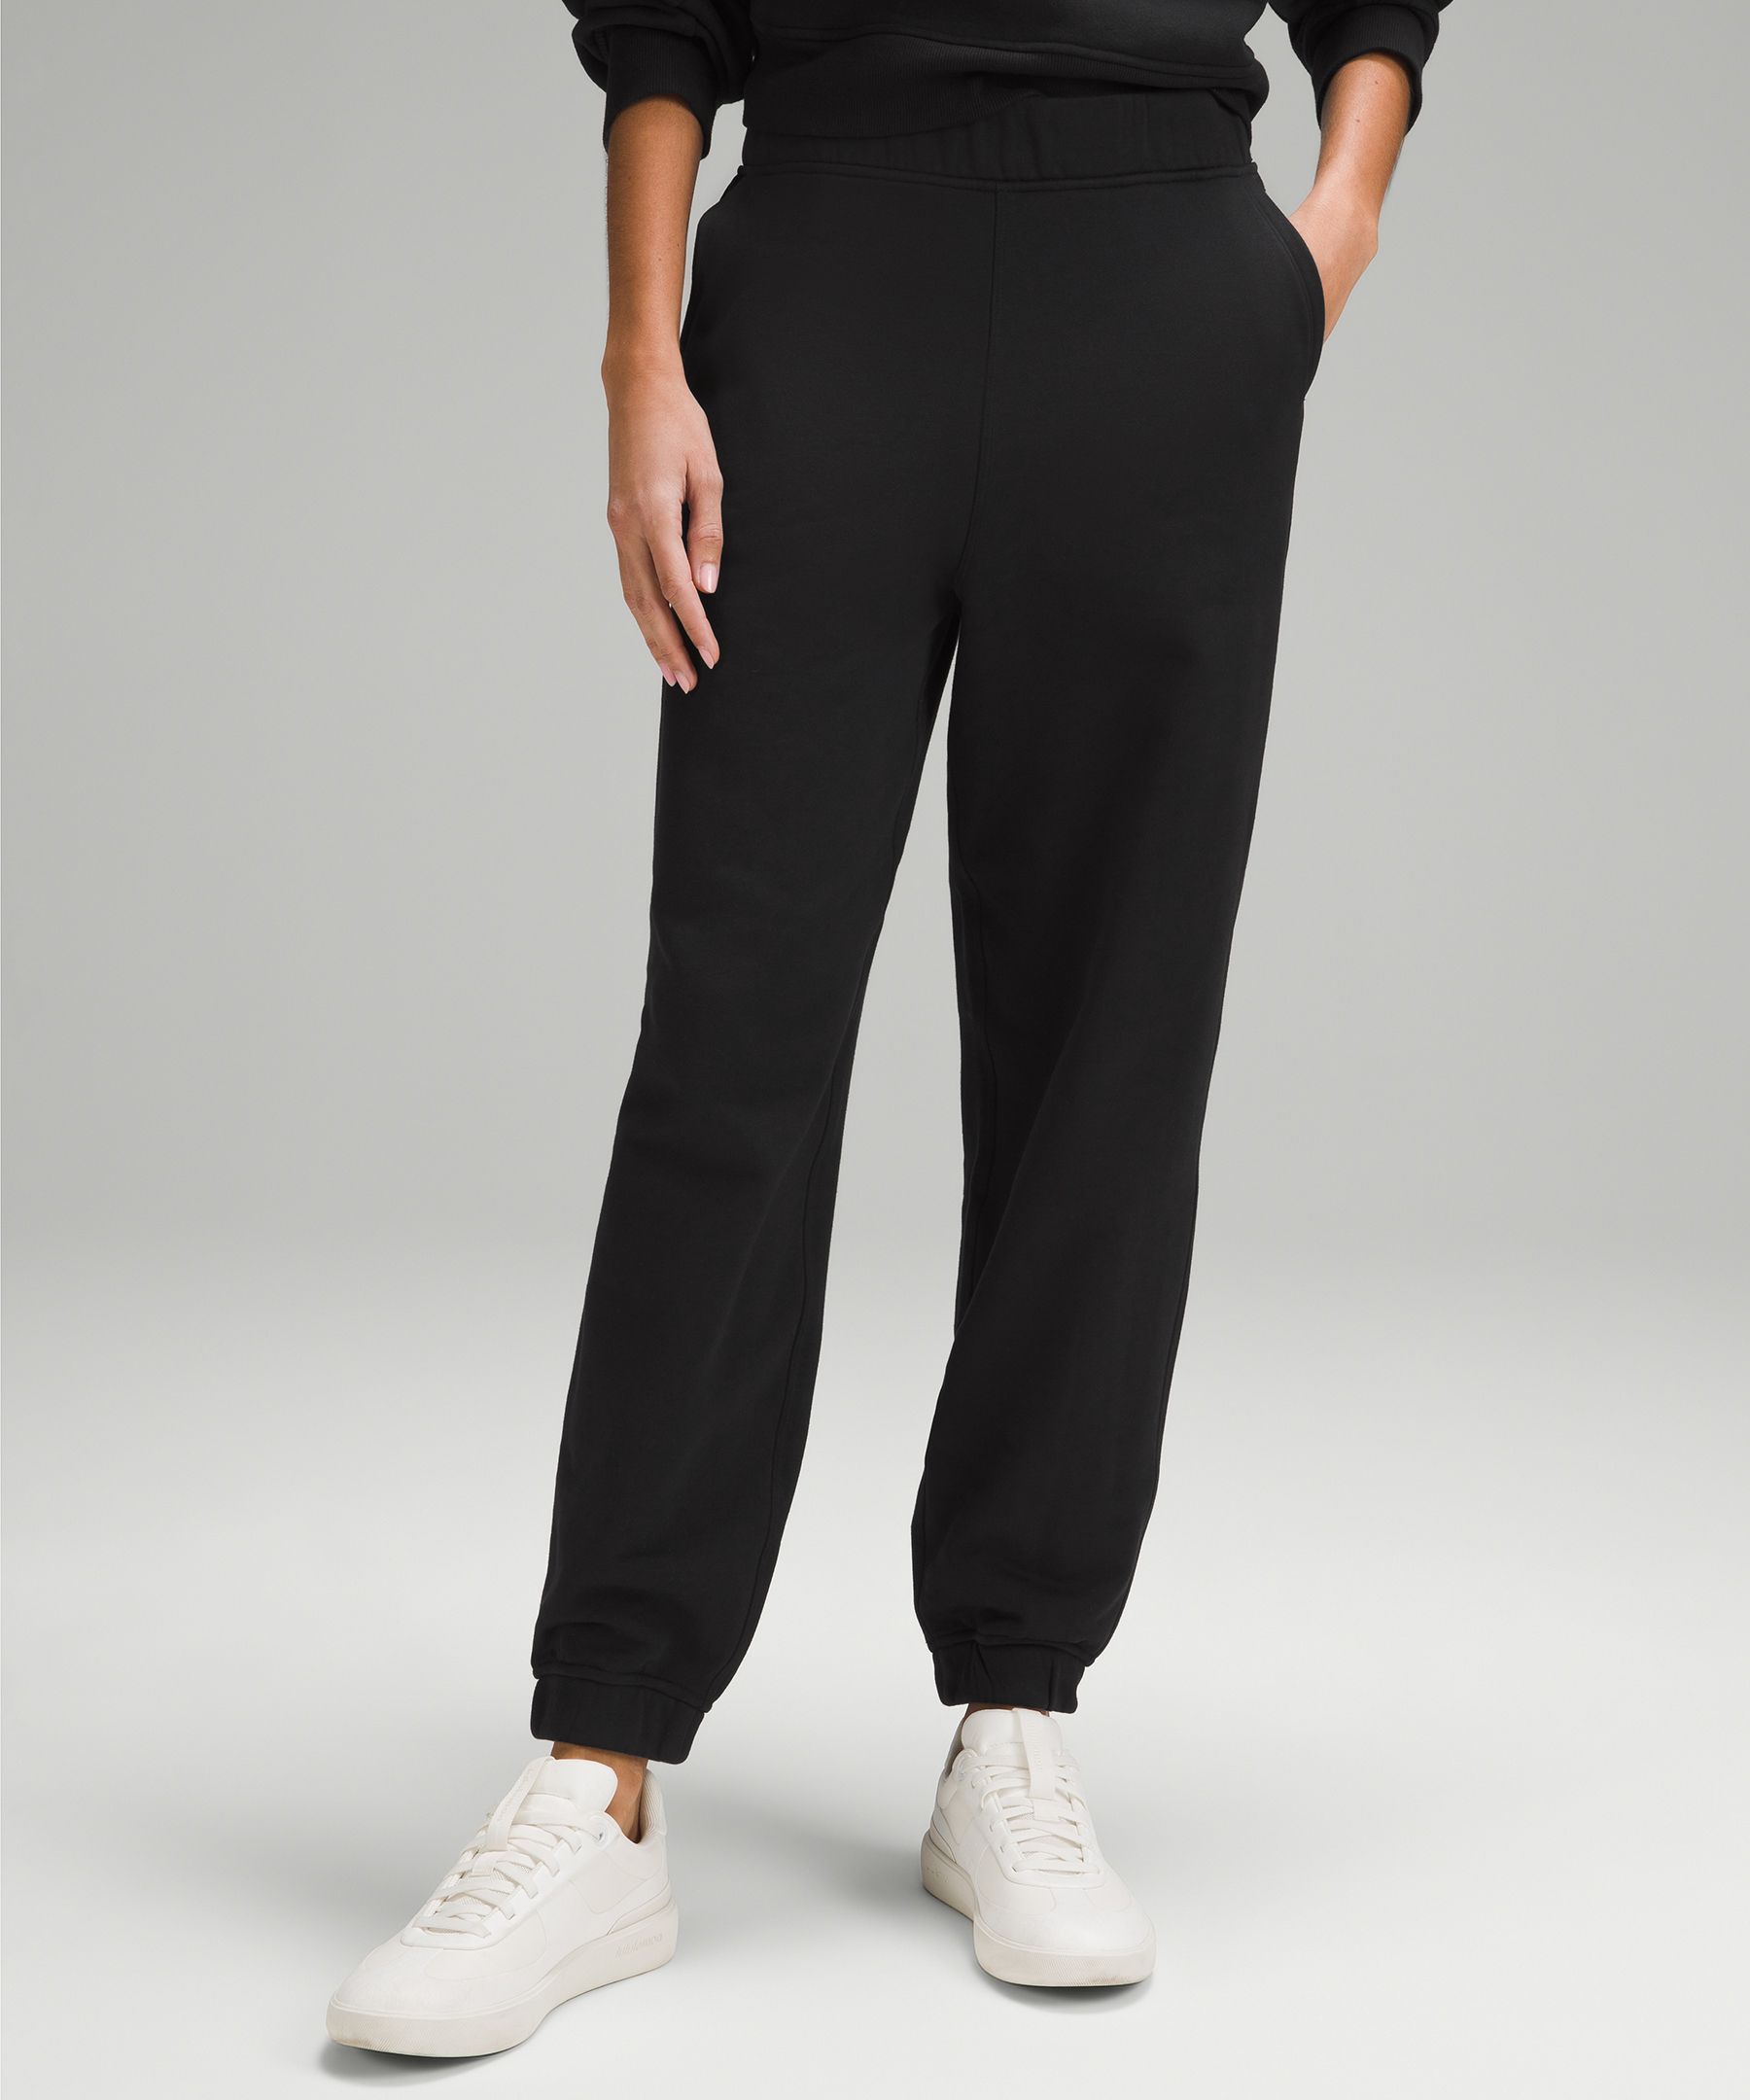 Lululemon Women Activewear Pants 4 Black Joggers Zipped Pockets 27 Inseam